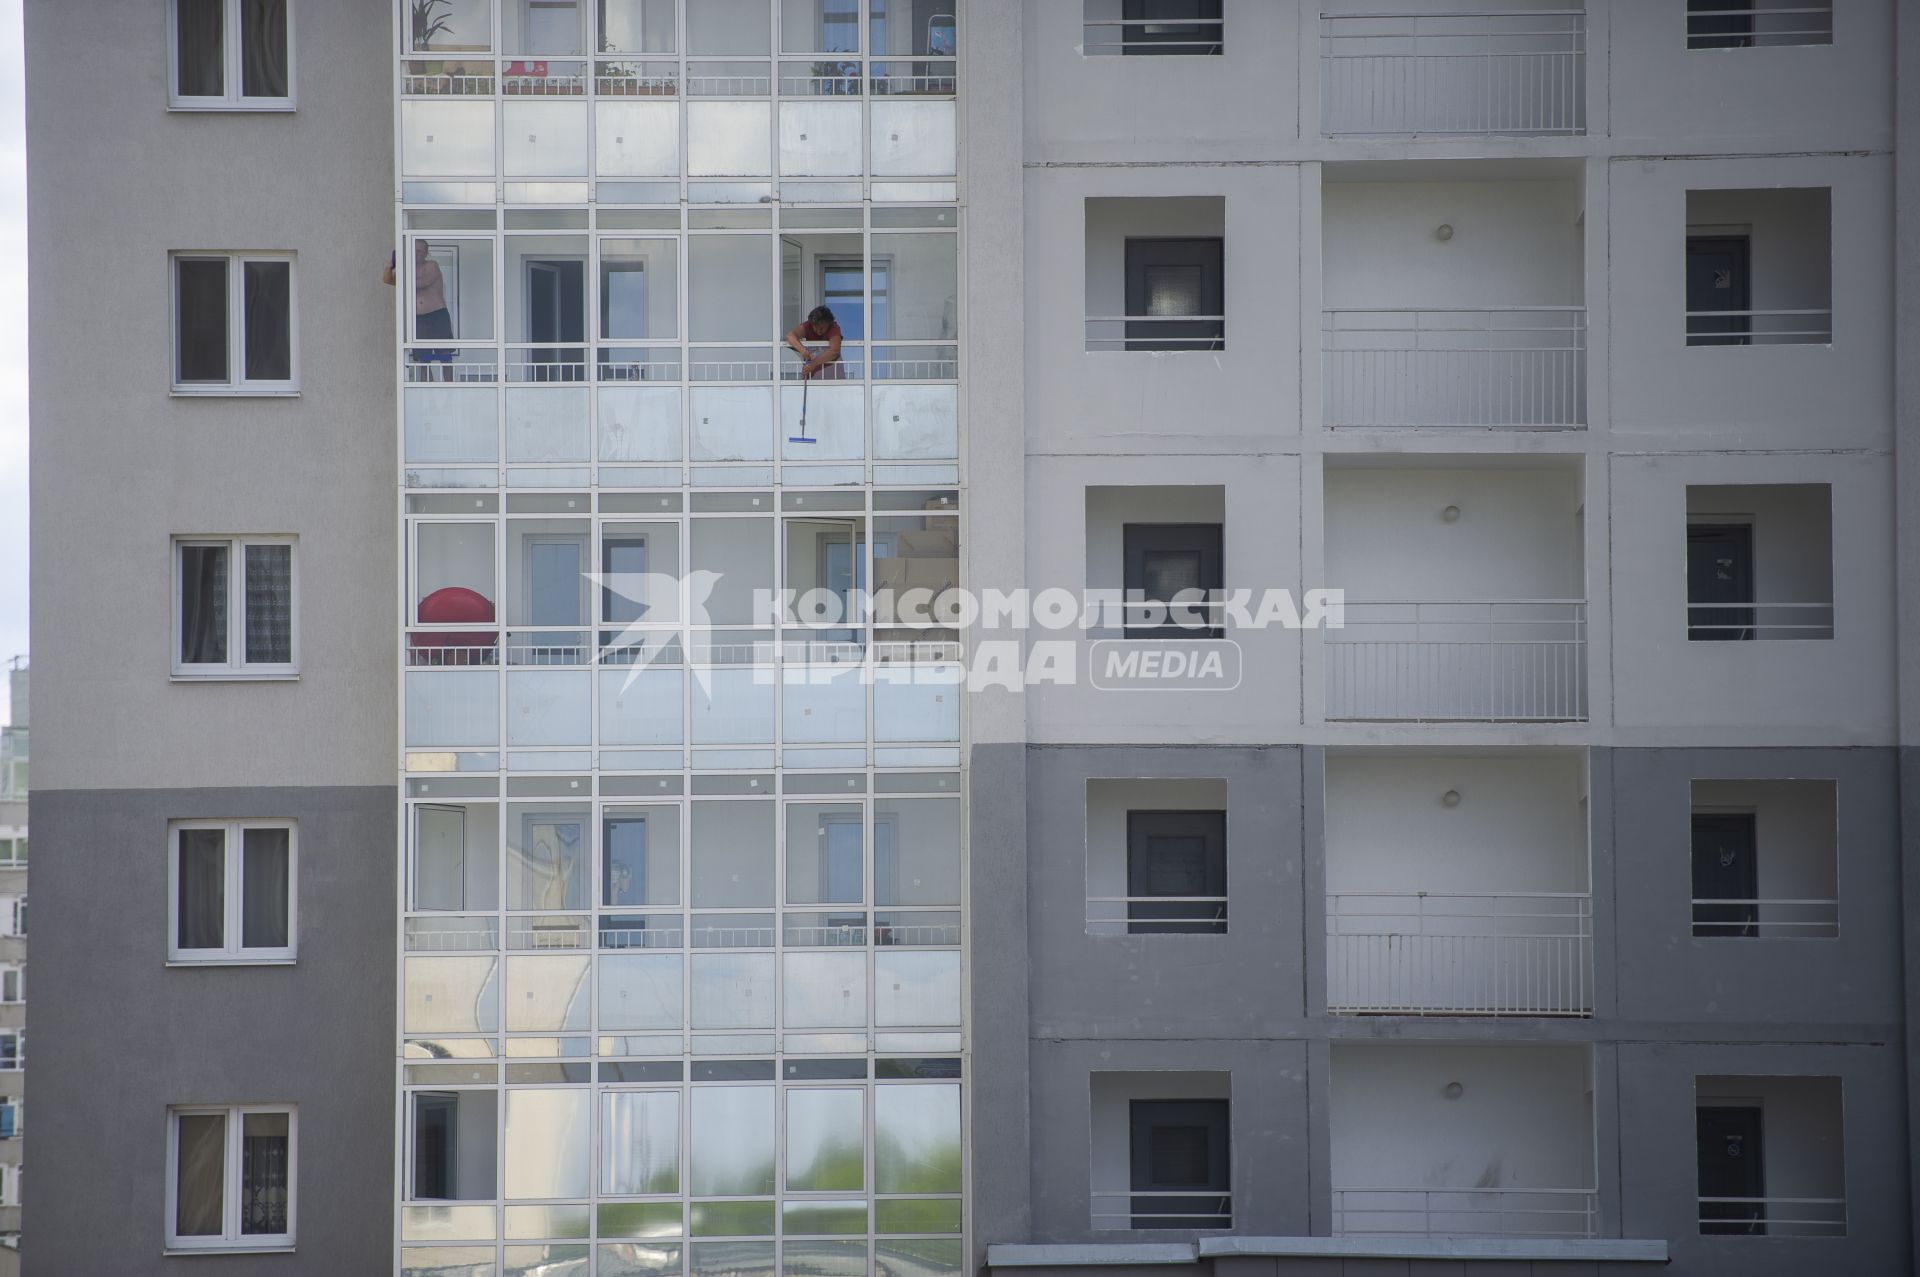 Екатеринбург. Окна многокваритрного жилого дома